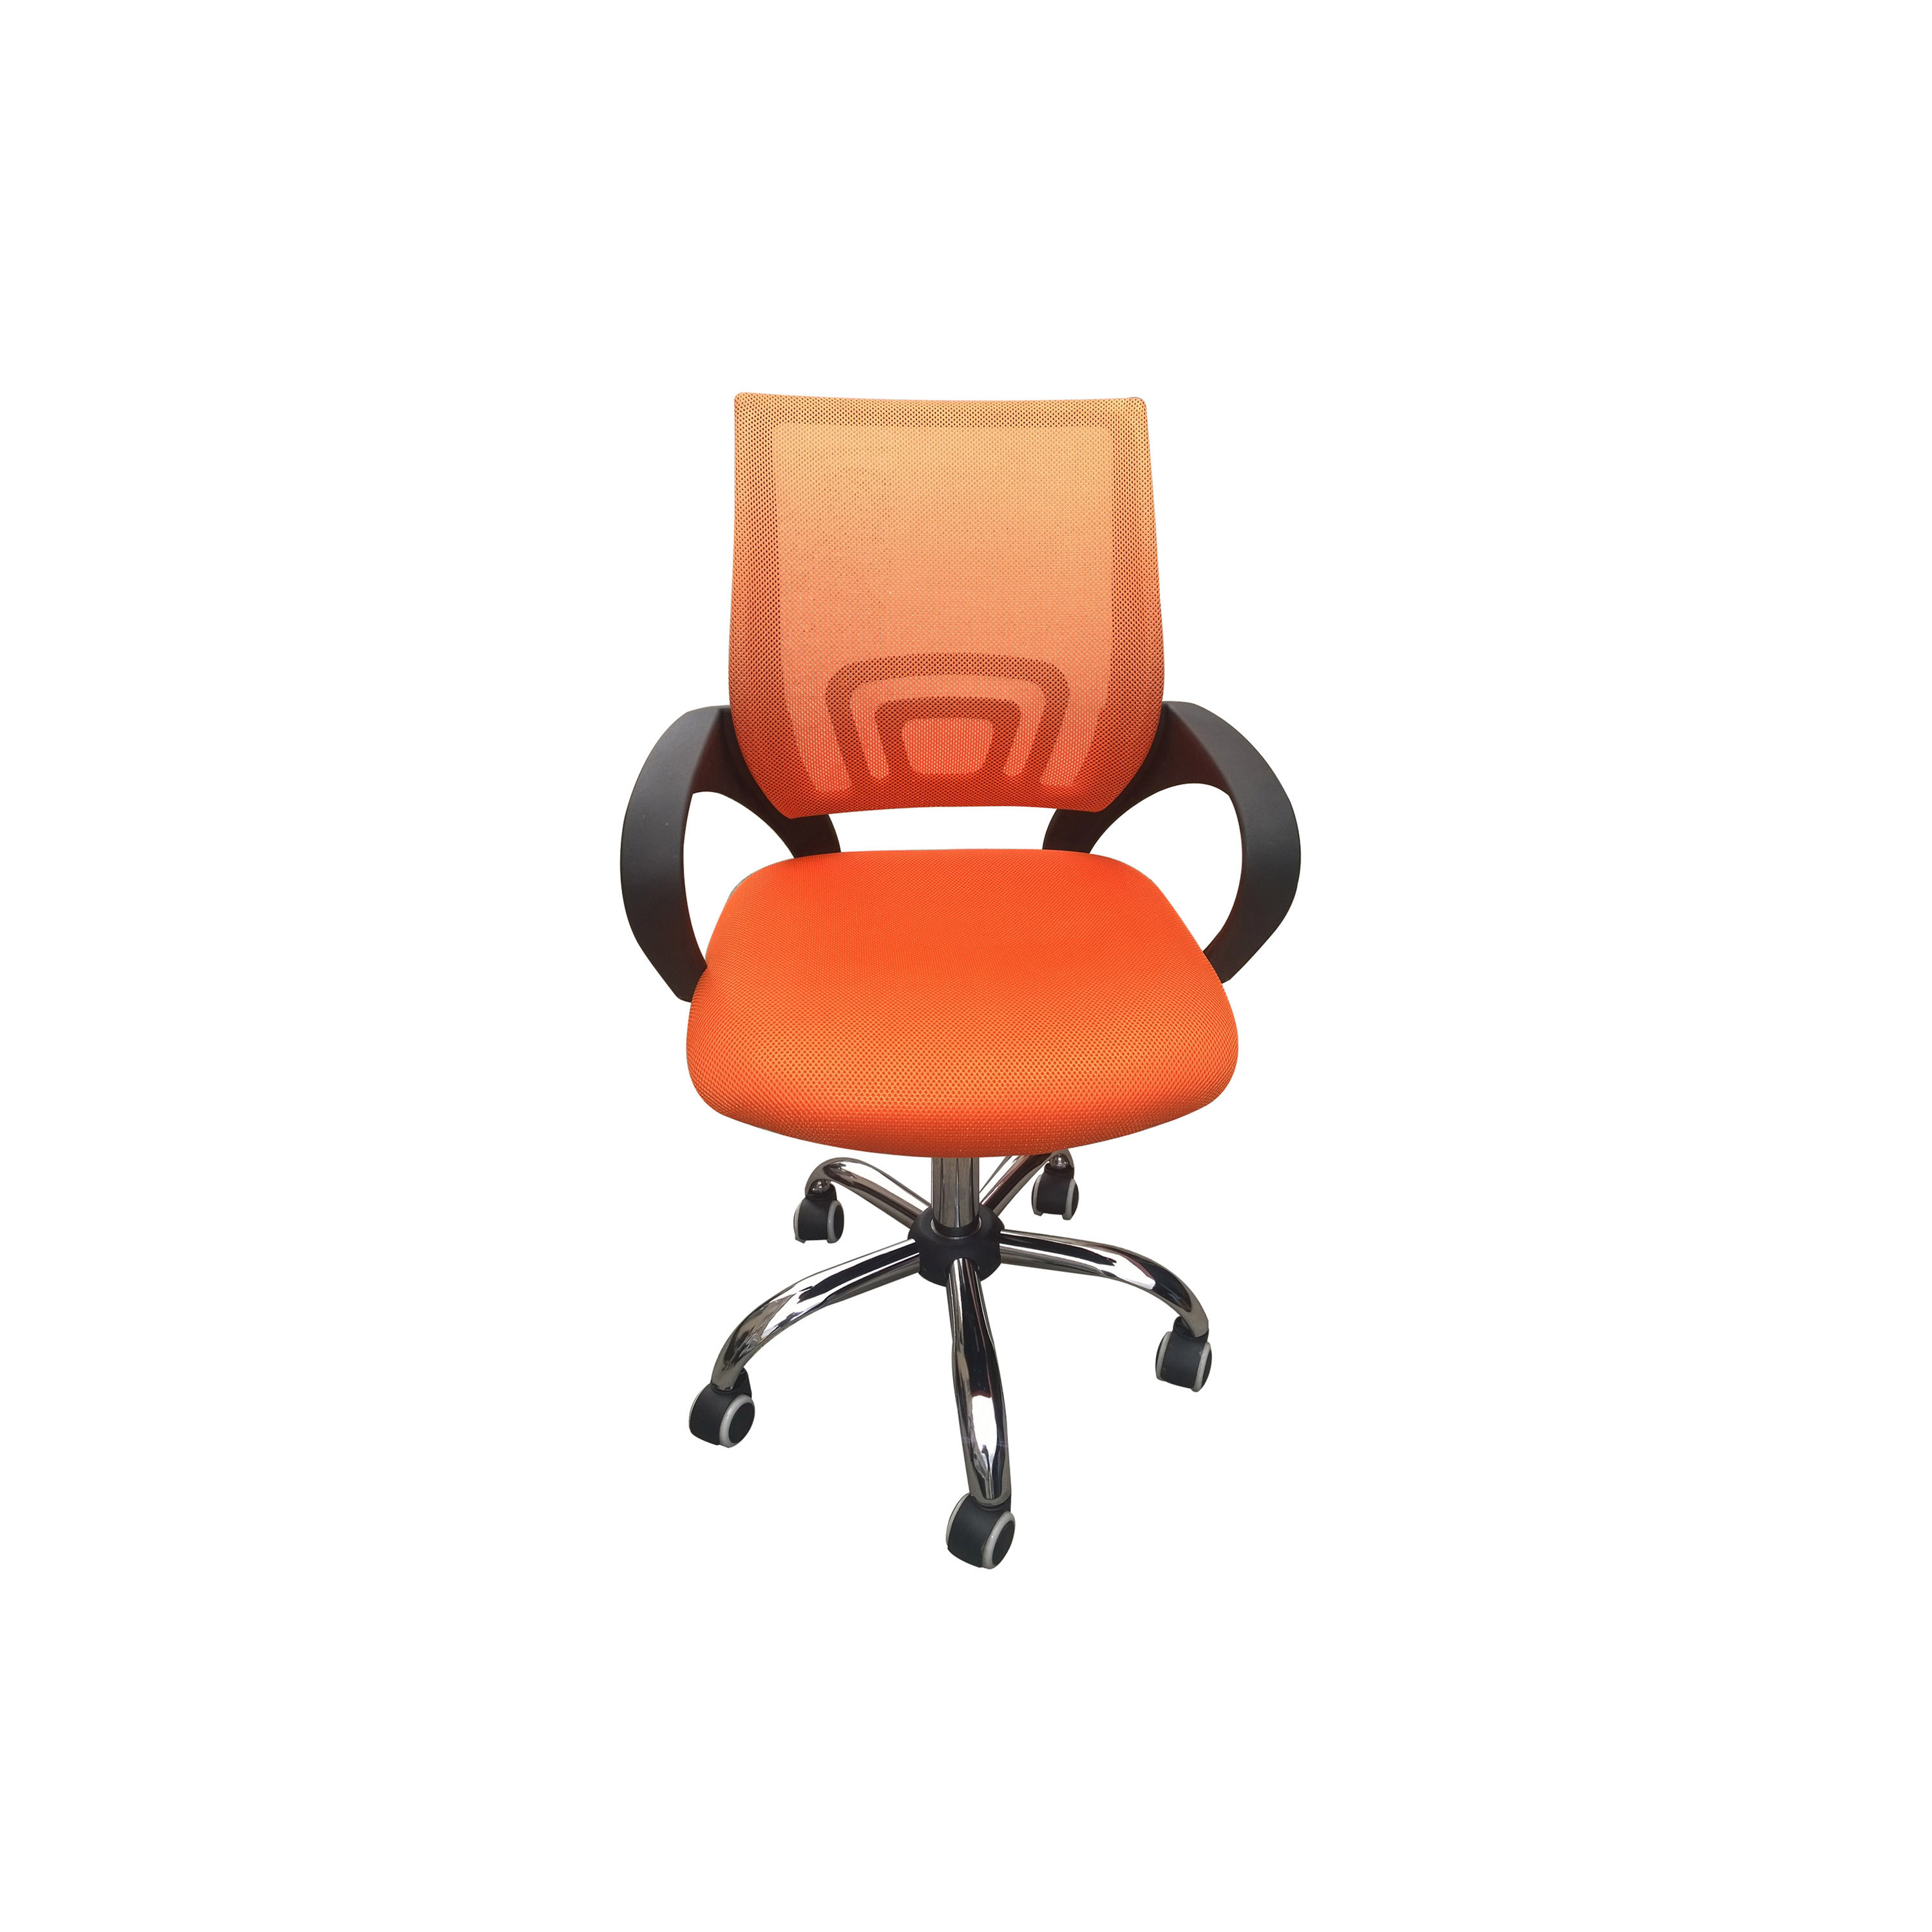 LPD Tate Mesh Back Office Chair Orange - image 1